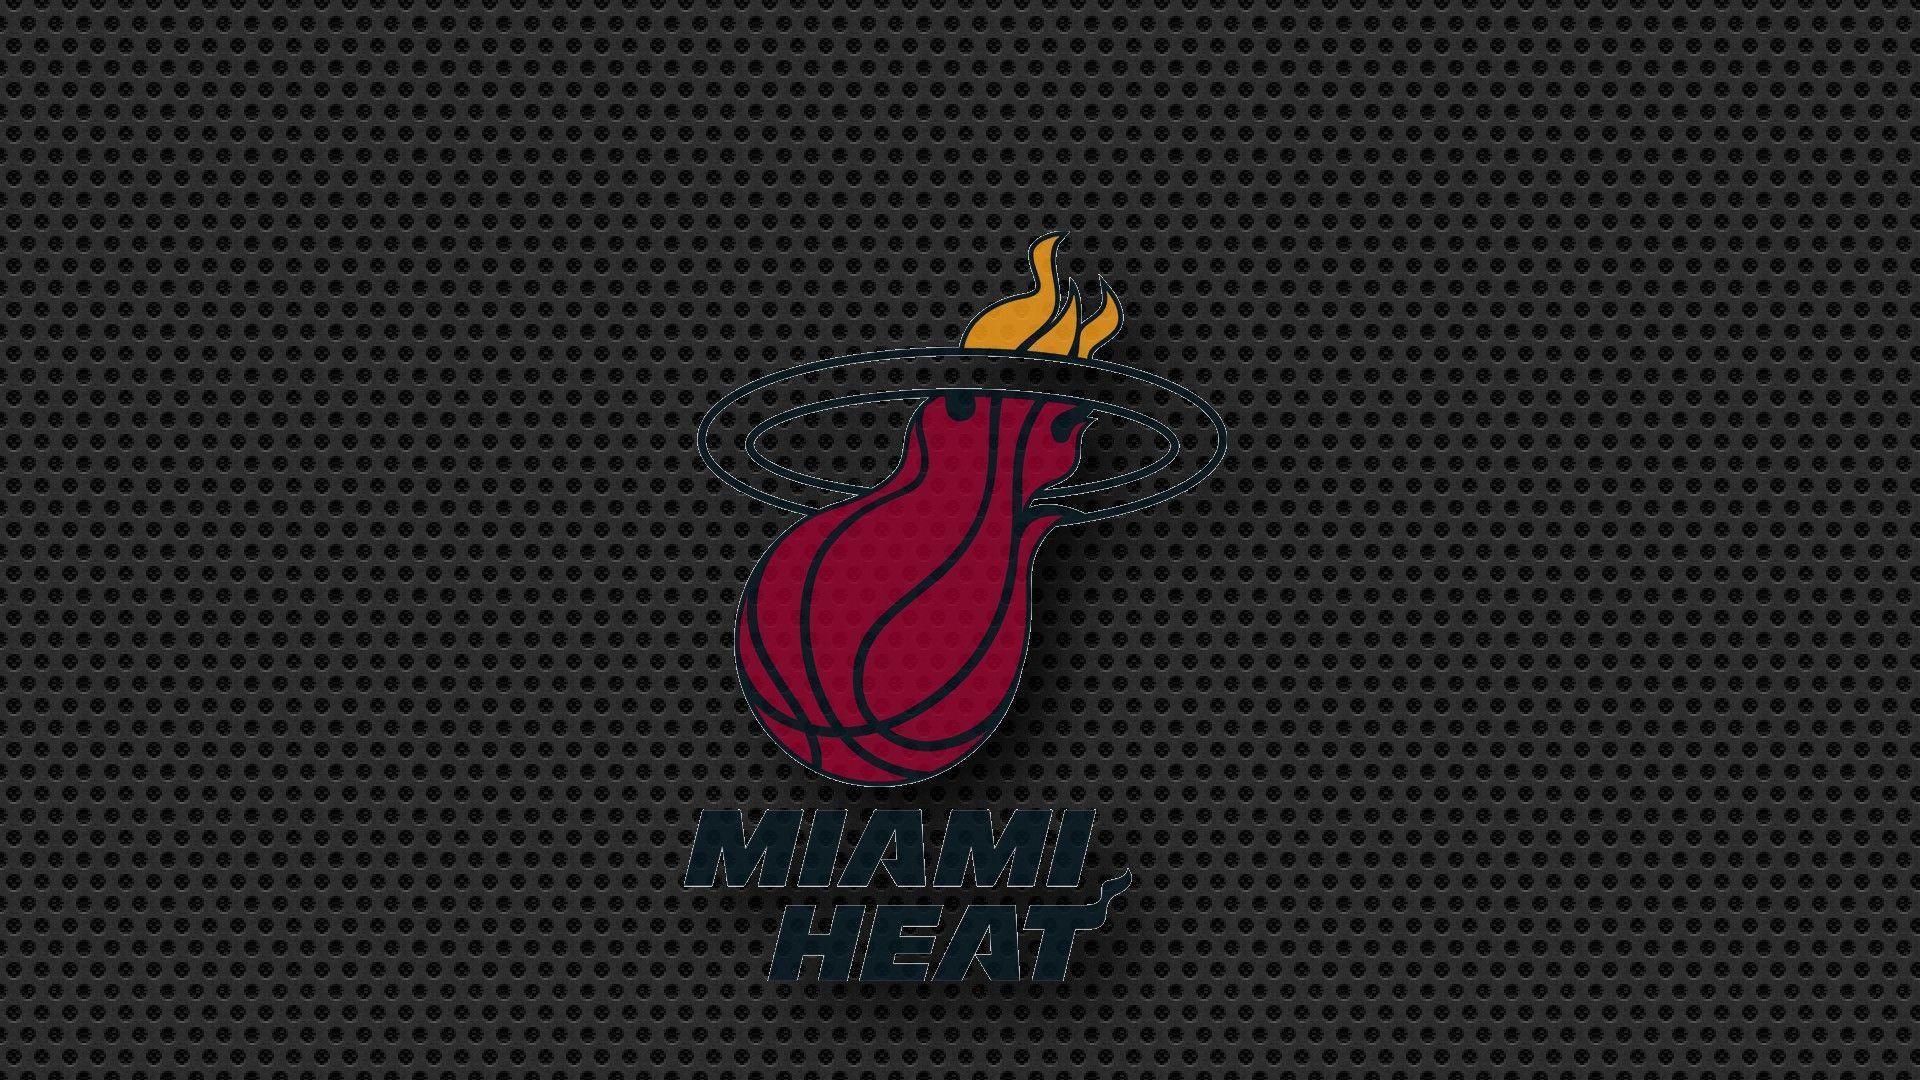 Miami Heat Logo On Carbon Black 1920x1080 HD NBA / Miami Heat